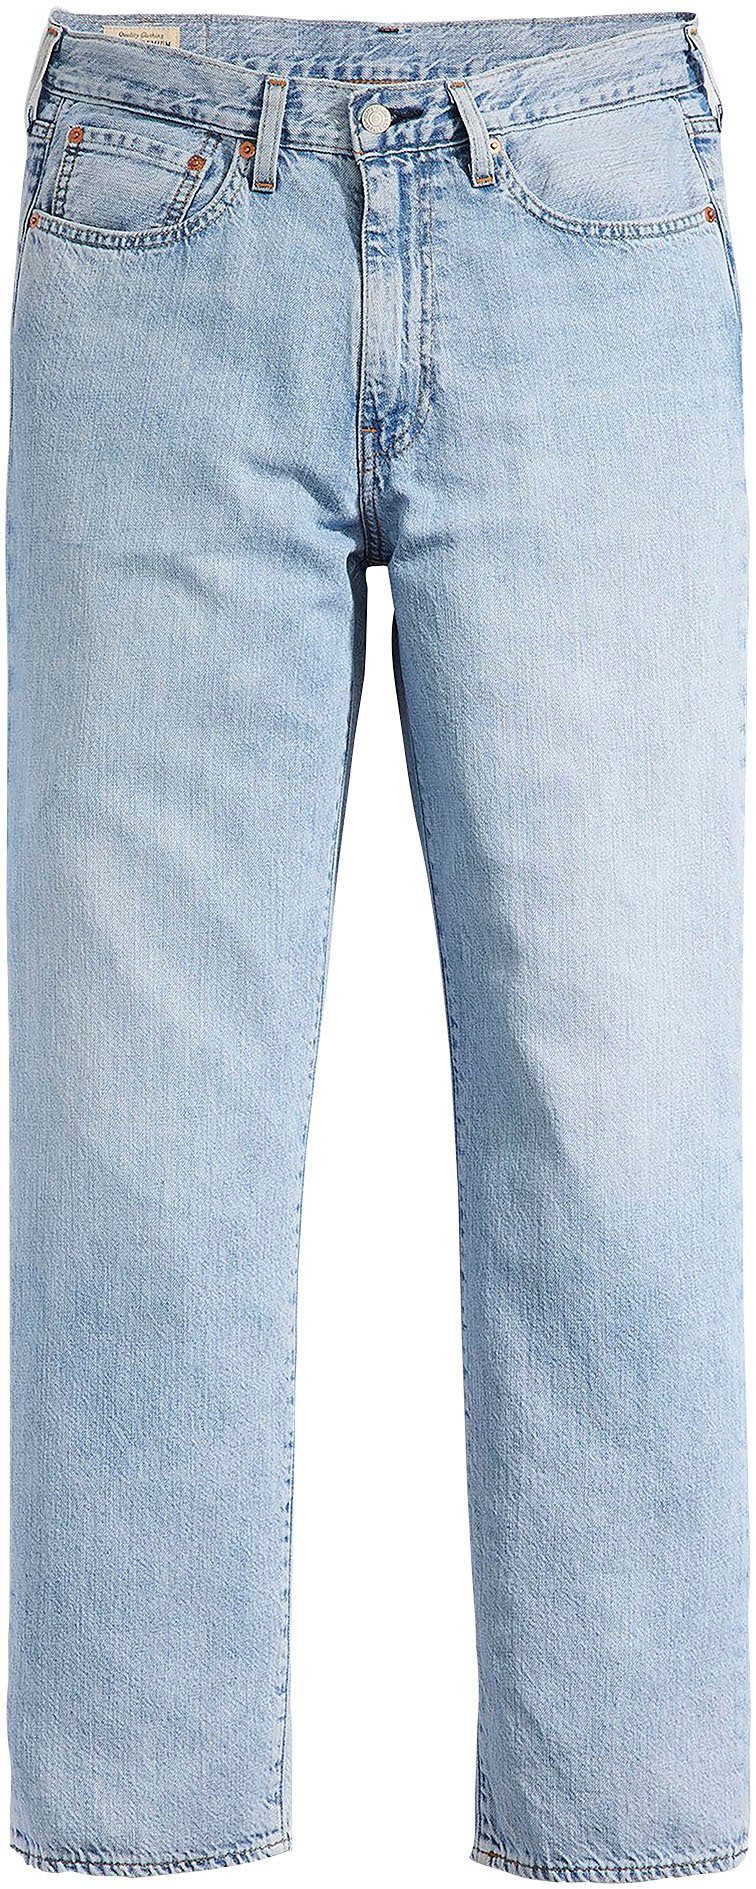 Levi's Loose fit jeans 568 STAY LOOSE met aandeel linnen